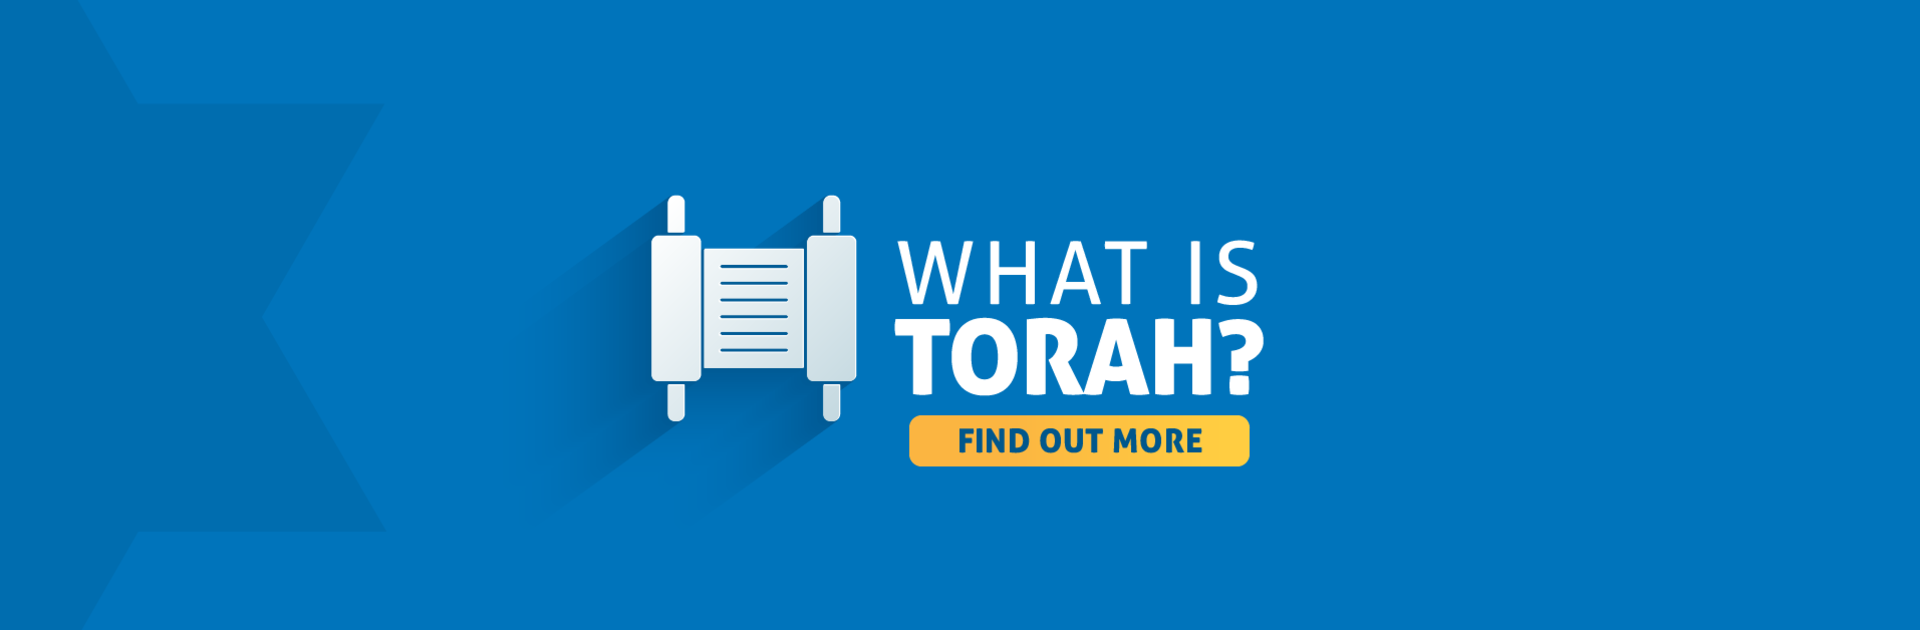 What Is Torah? image